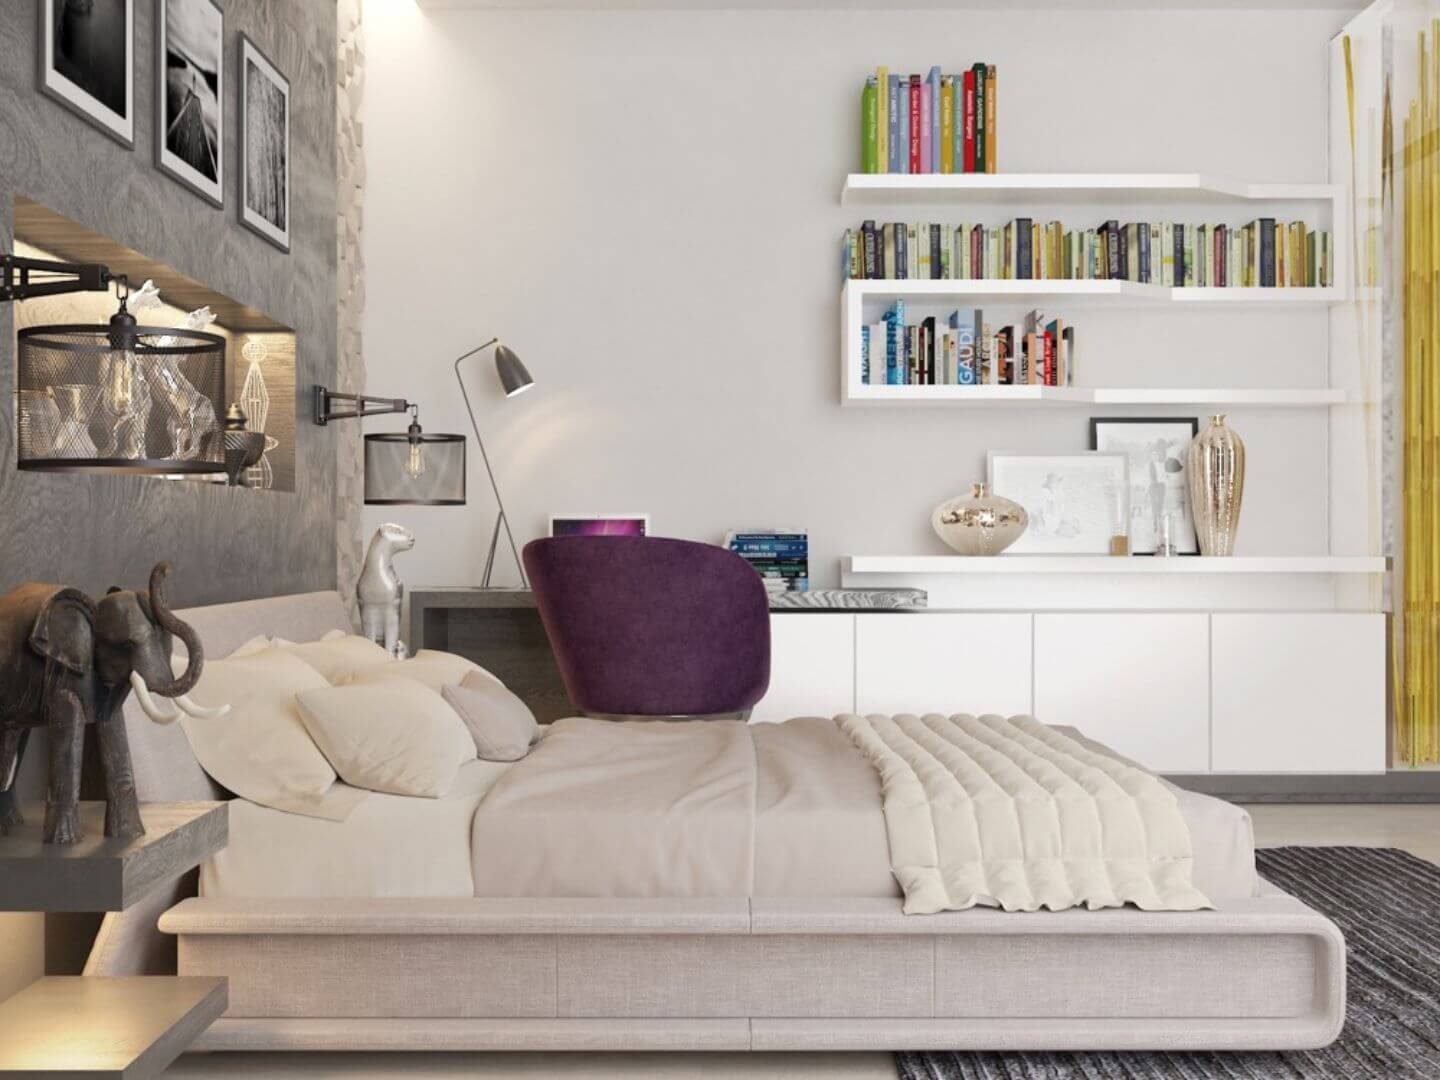 bookshelves in bedroom interior design